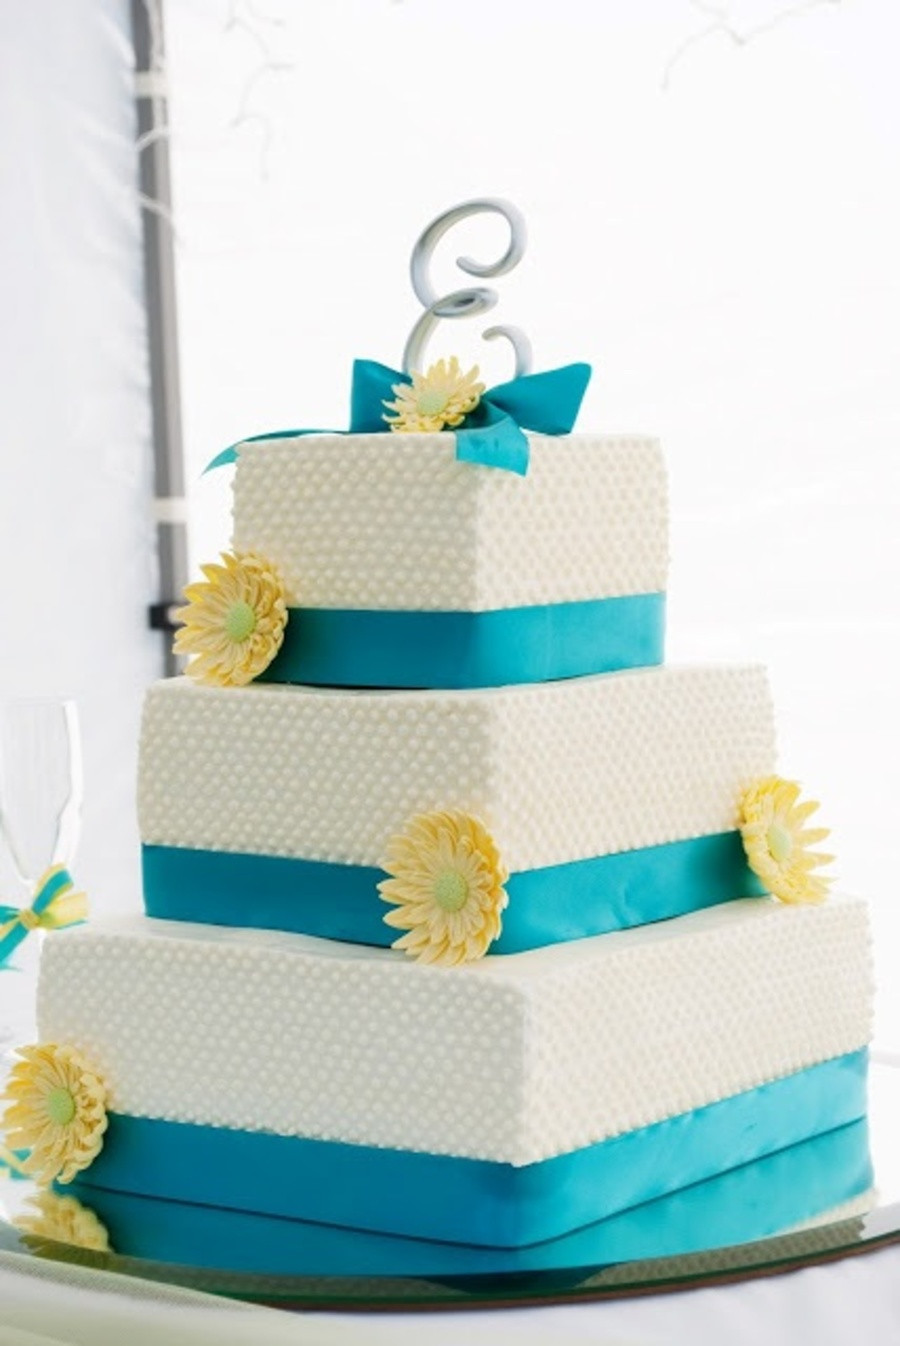 Turquoise Wedding Cake
 Turquoise And Yellow Wedding Cake CakeCentral